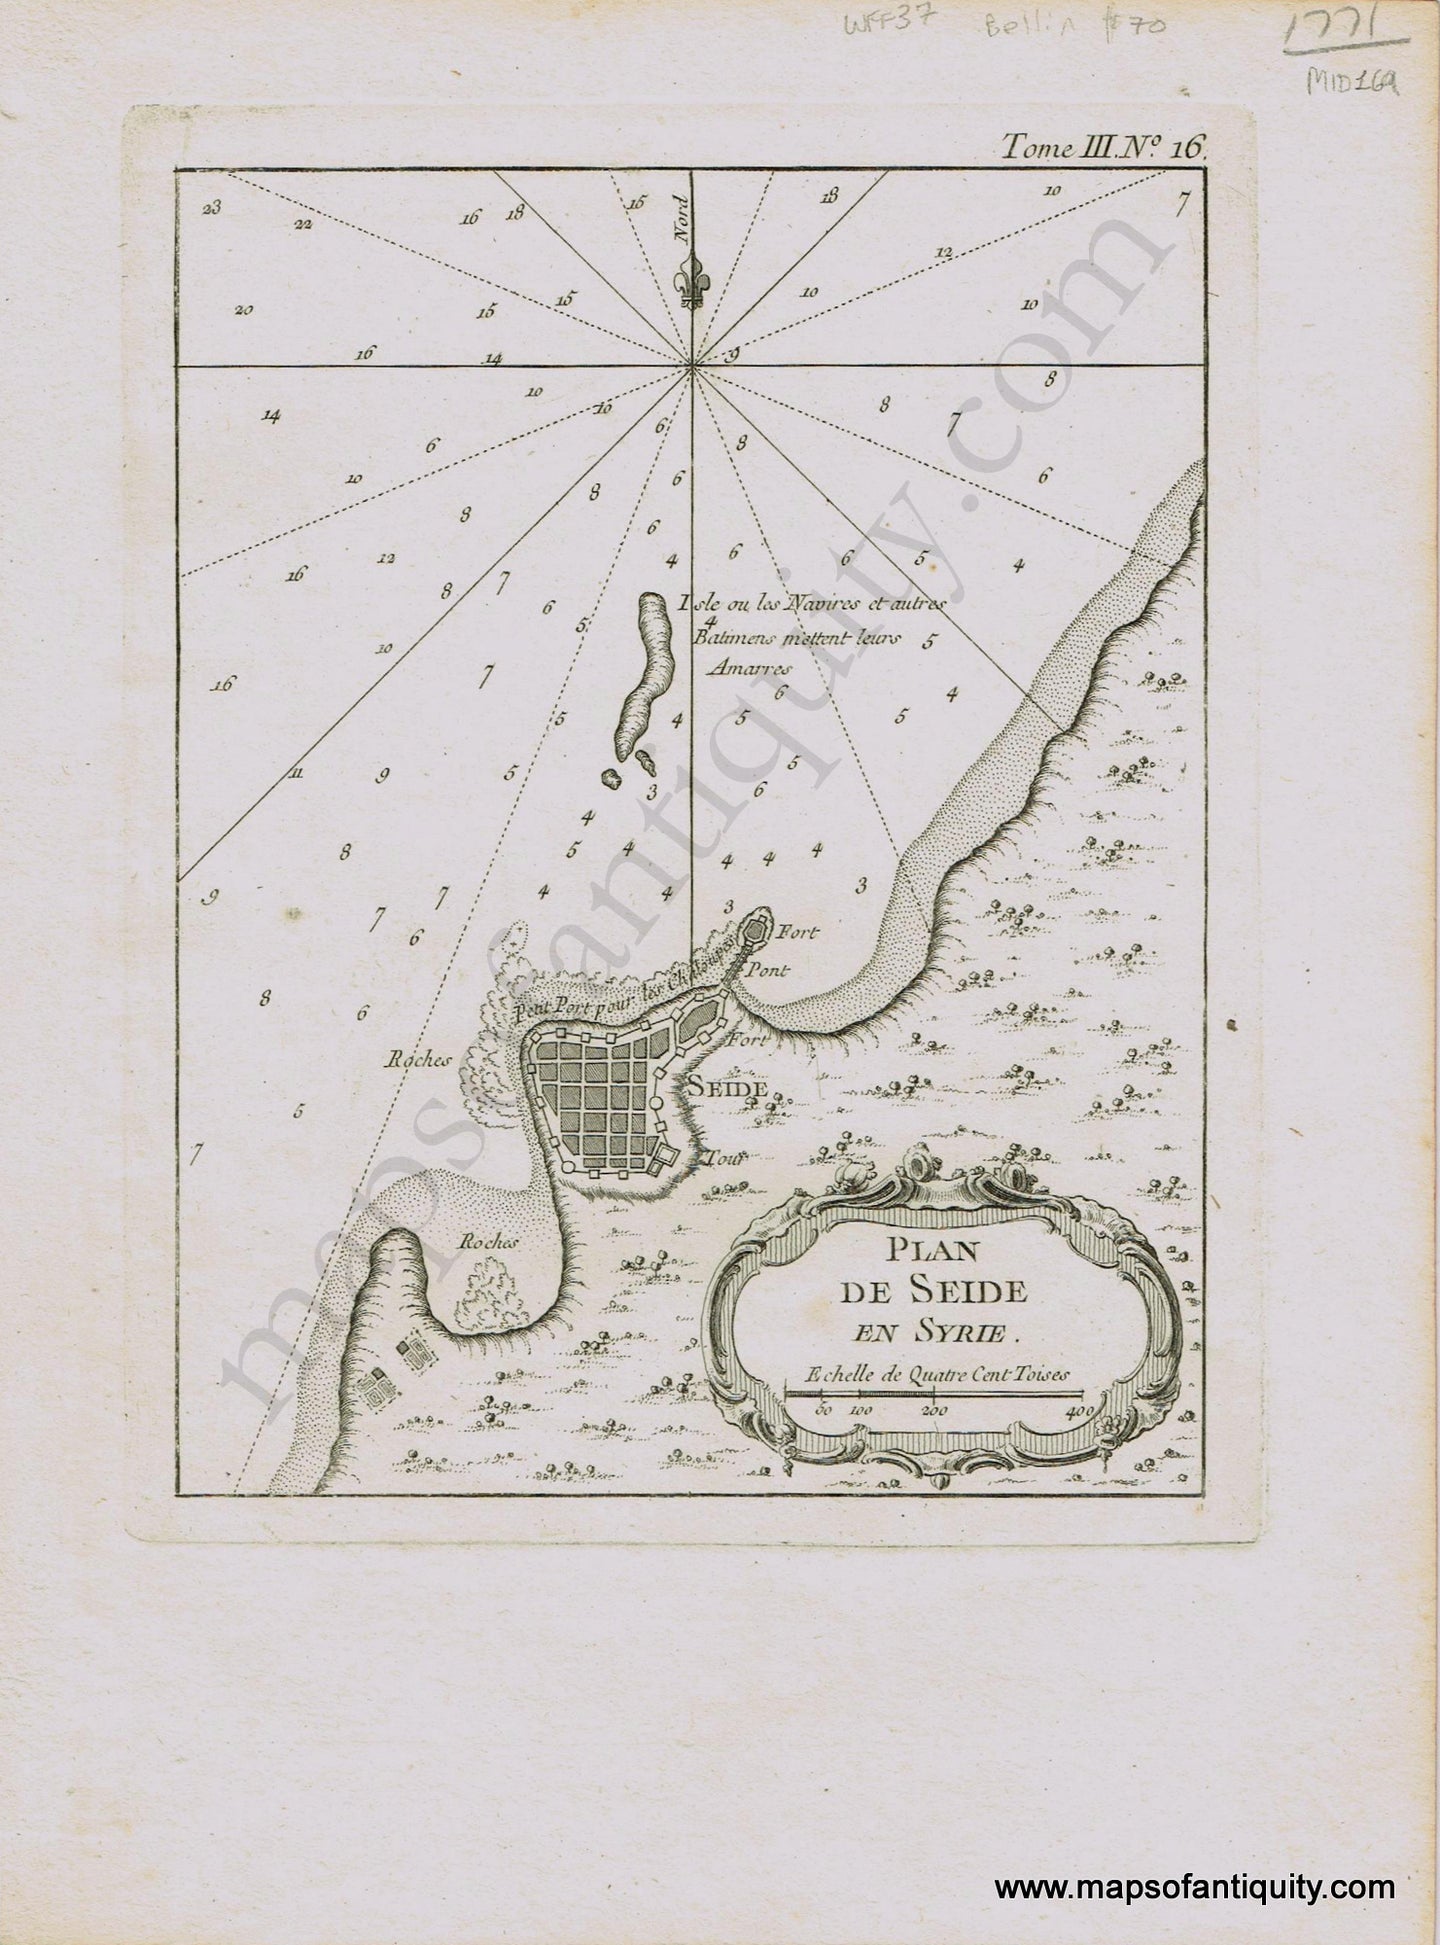 Antique-Map-Plan-de-Seide-en-Syrie-Lebanon-Lebanese-Plan-of-Sidon-Bellin-1771-1770s-1700s-Mid-Late-18th-Century-Maps-of-Antiquity